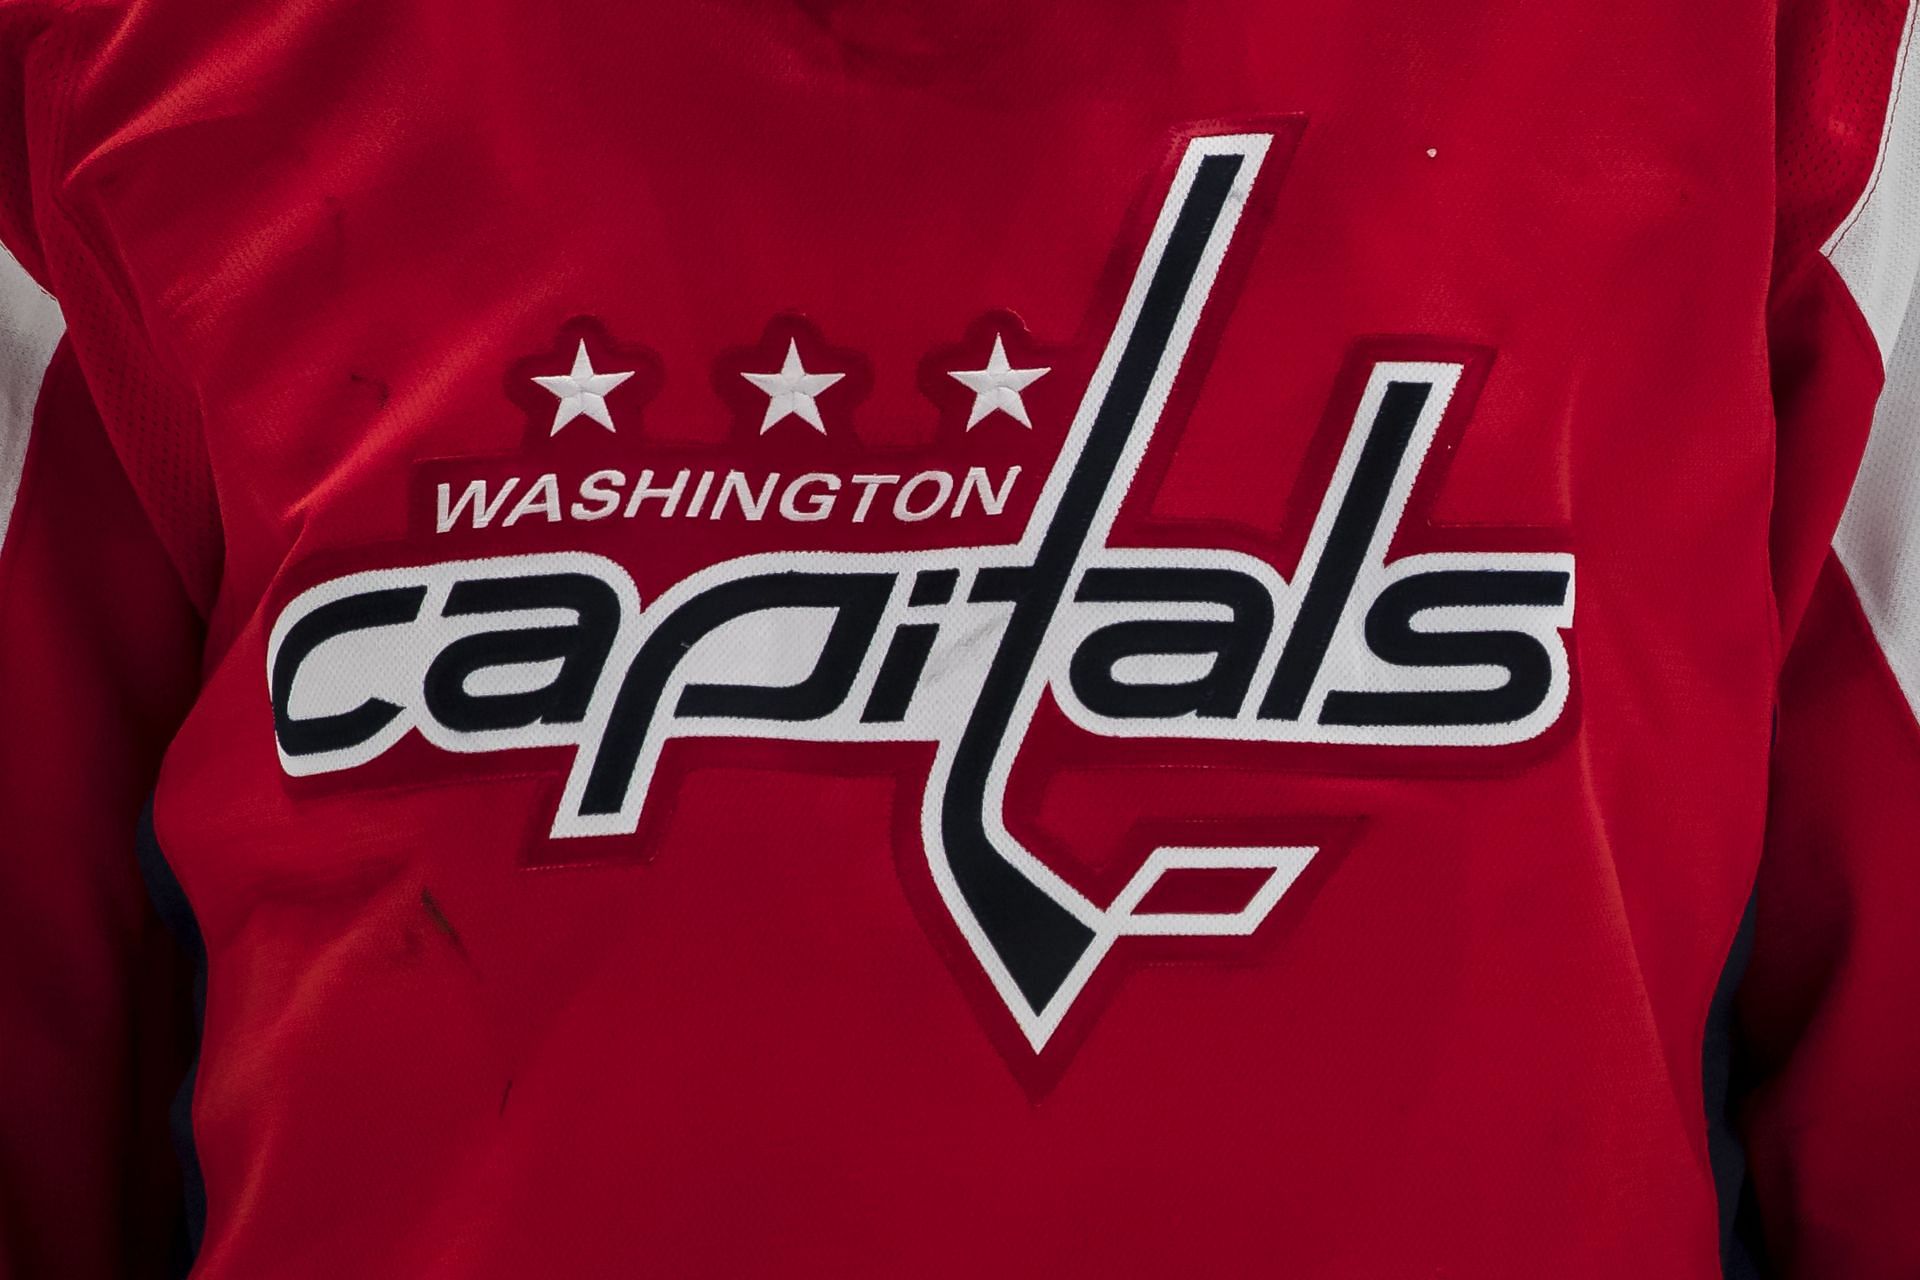 New Blue Washington Capitals Third Jersey Released – SportsLogos